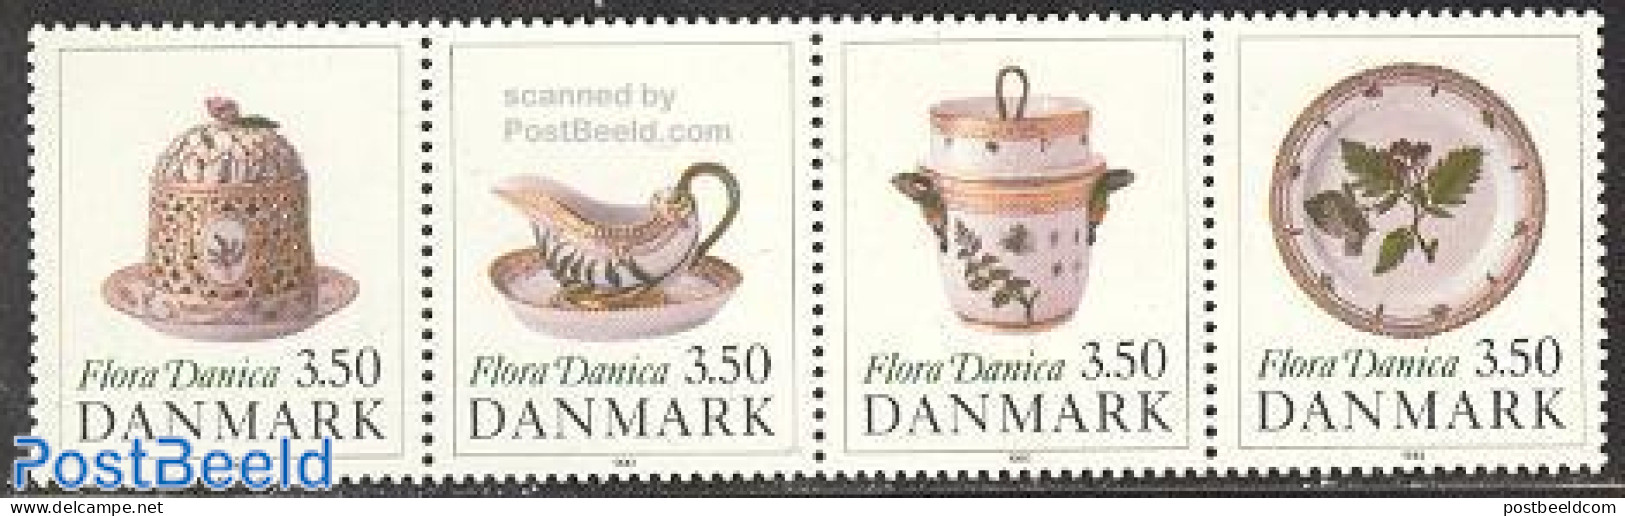 Denmark 1990 Porcelain 4v [:::], Mint NH, Art - Art & Antique Objects - Ceramics - Neufs